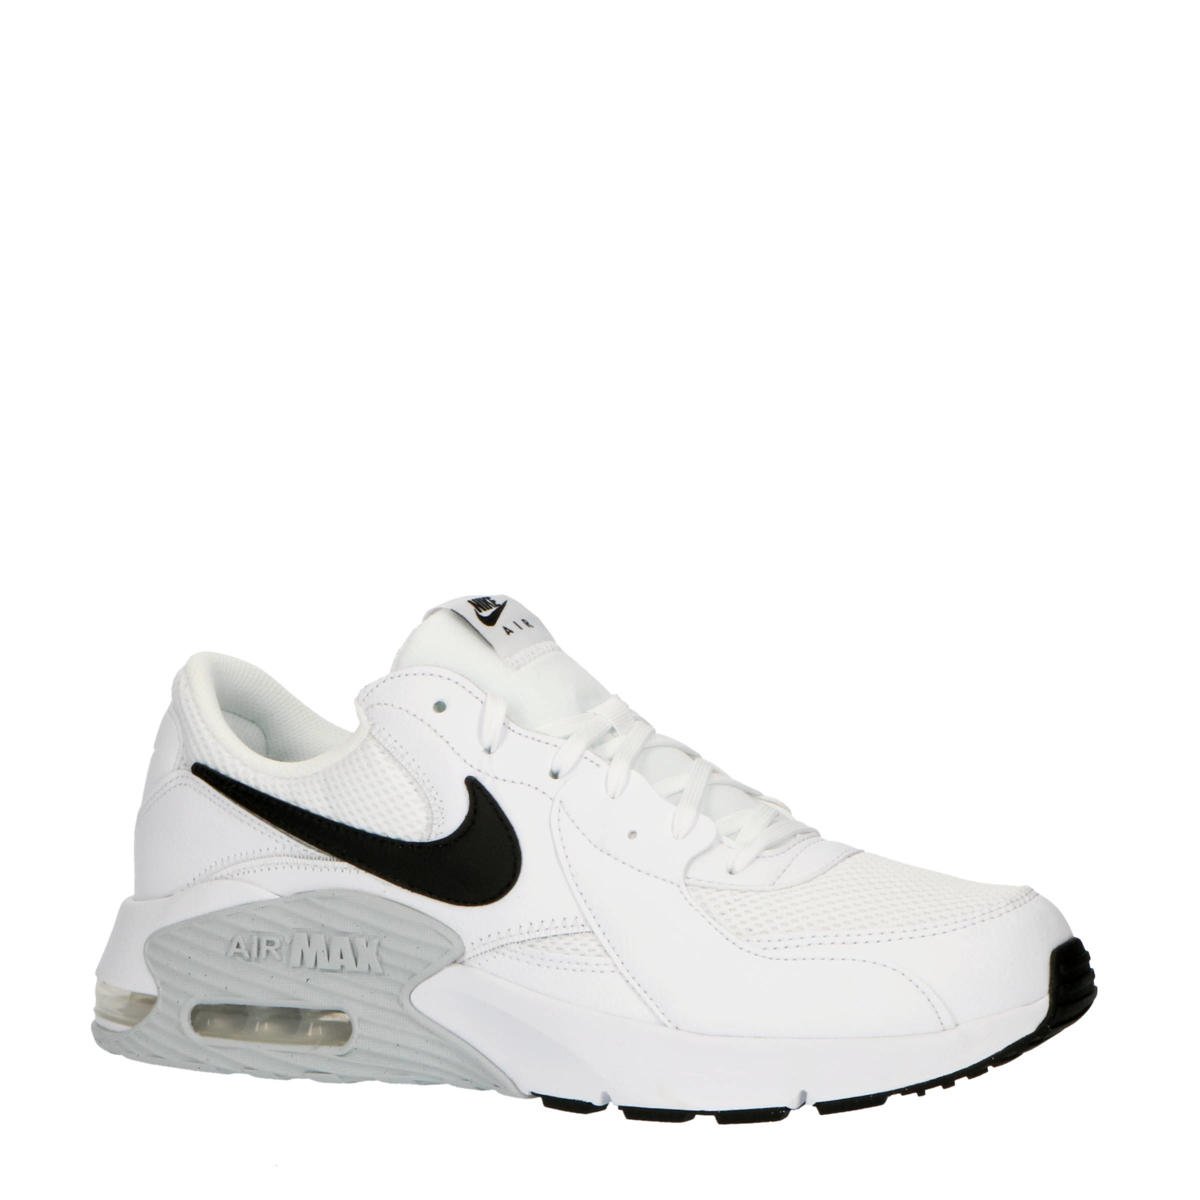 Aubergine pakket Pelagisch Nike Air Max Excee sneakers wit/zwart/zilver | wehkamp